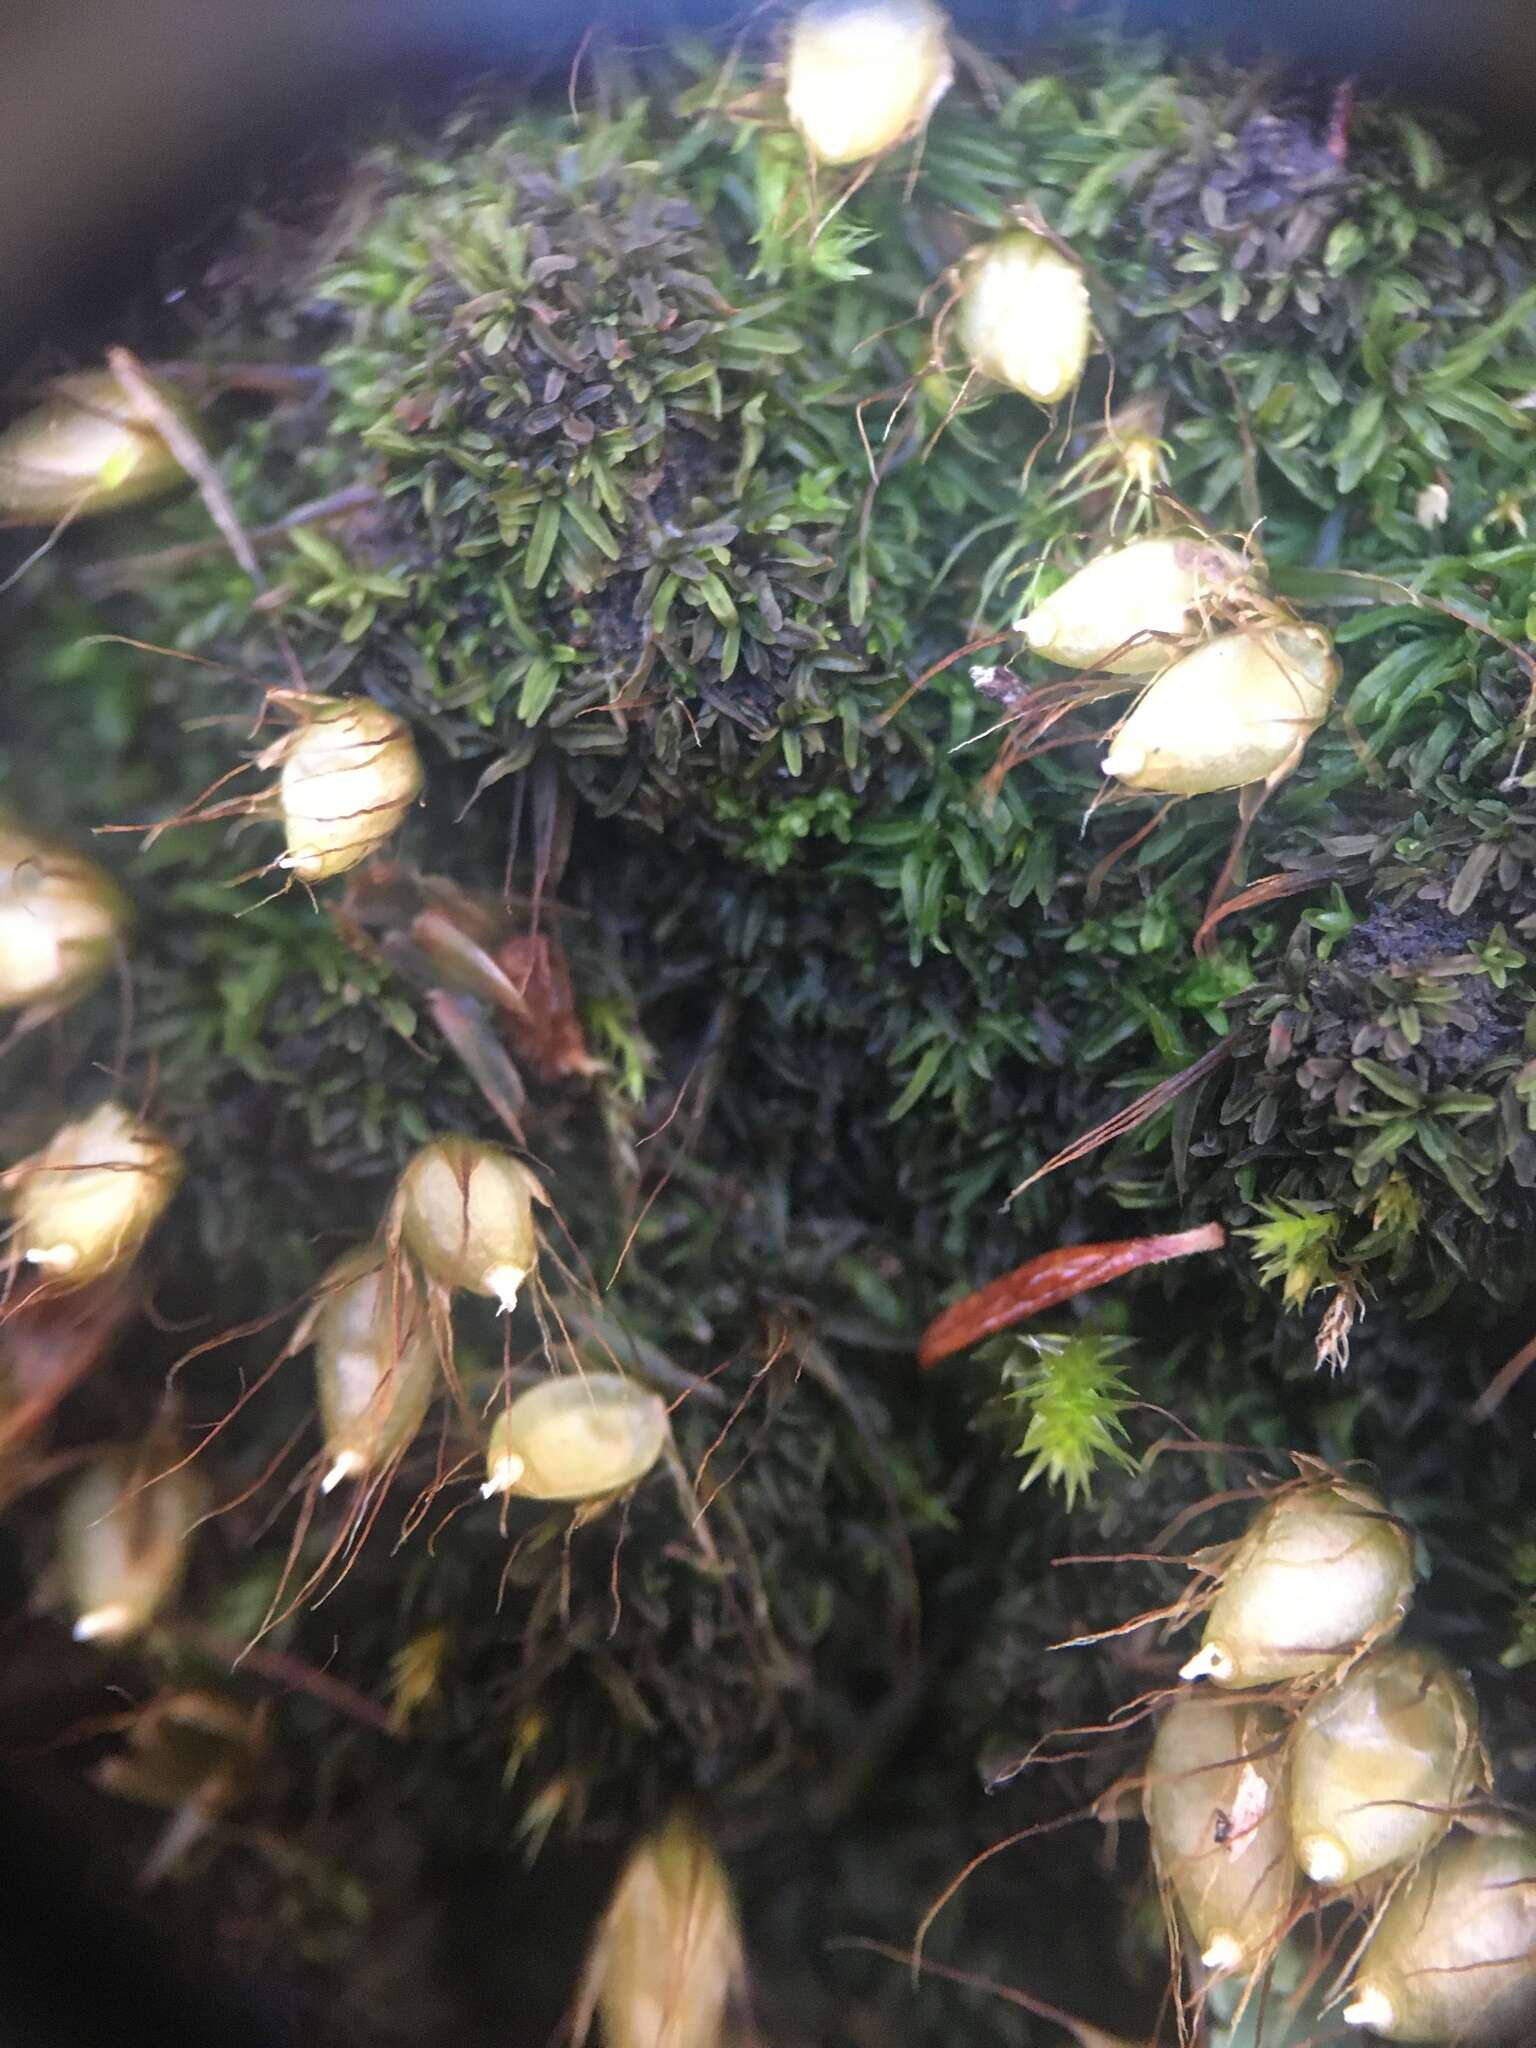 Image of diphyscium moss